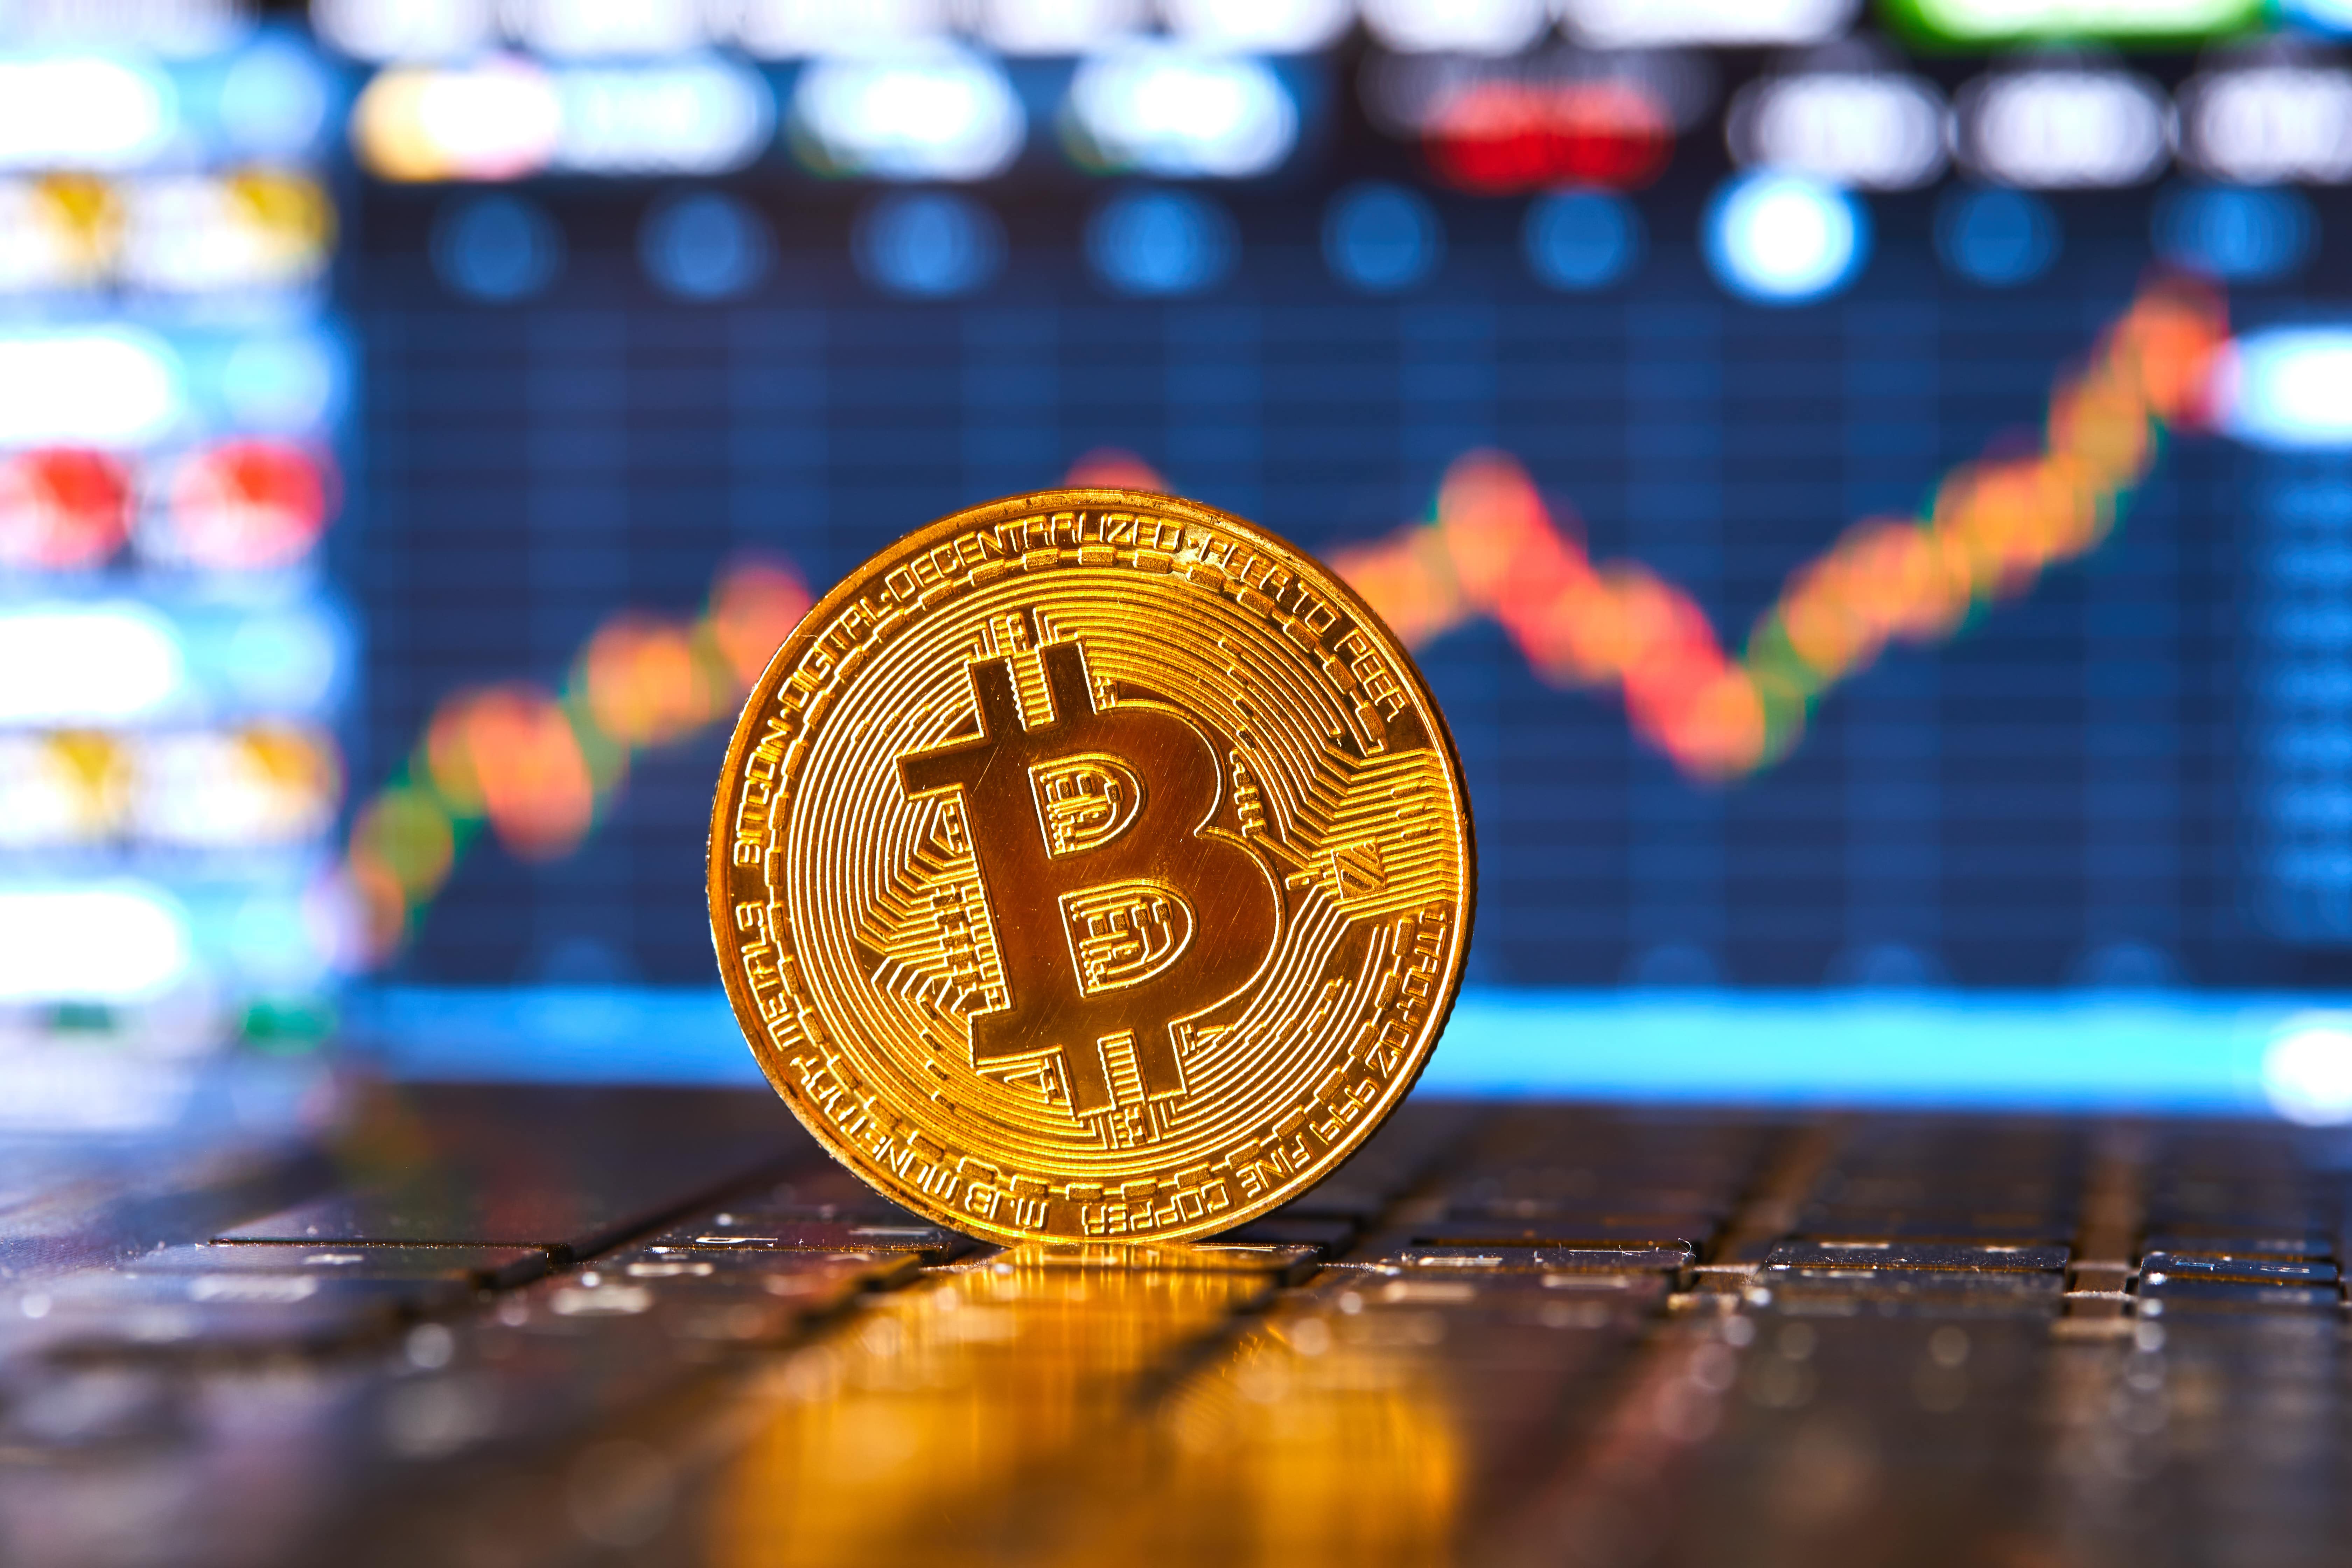 Crypto Analyst: Bitcoin Technical Indicator Struggles At This Range Before Bull Run